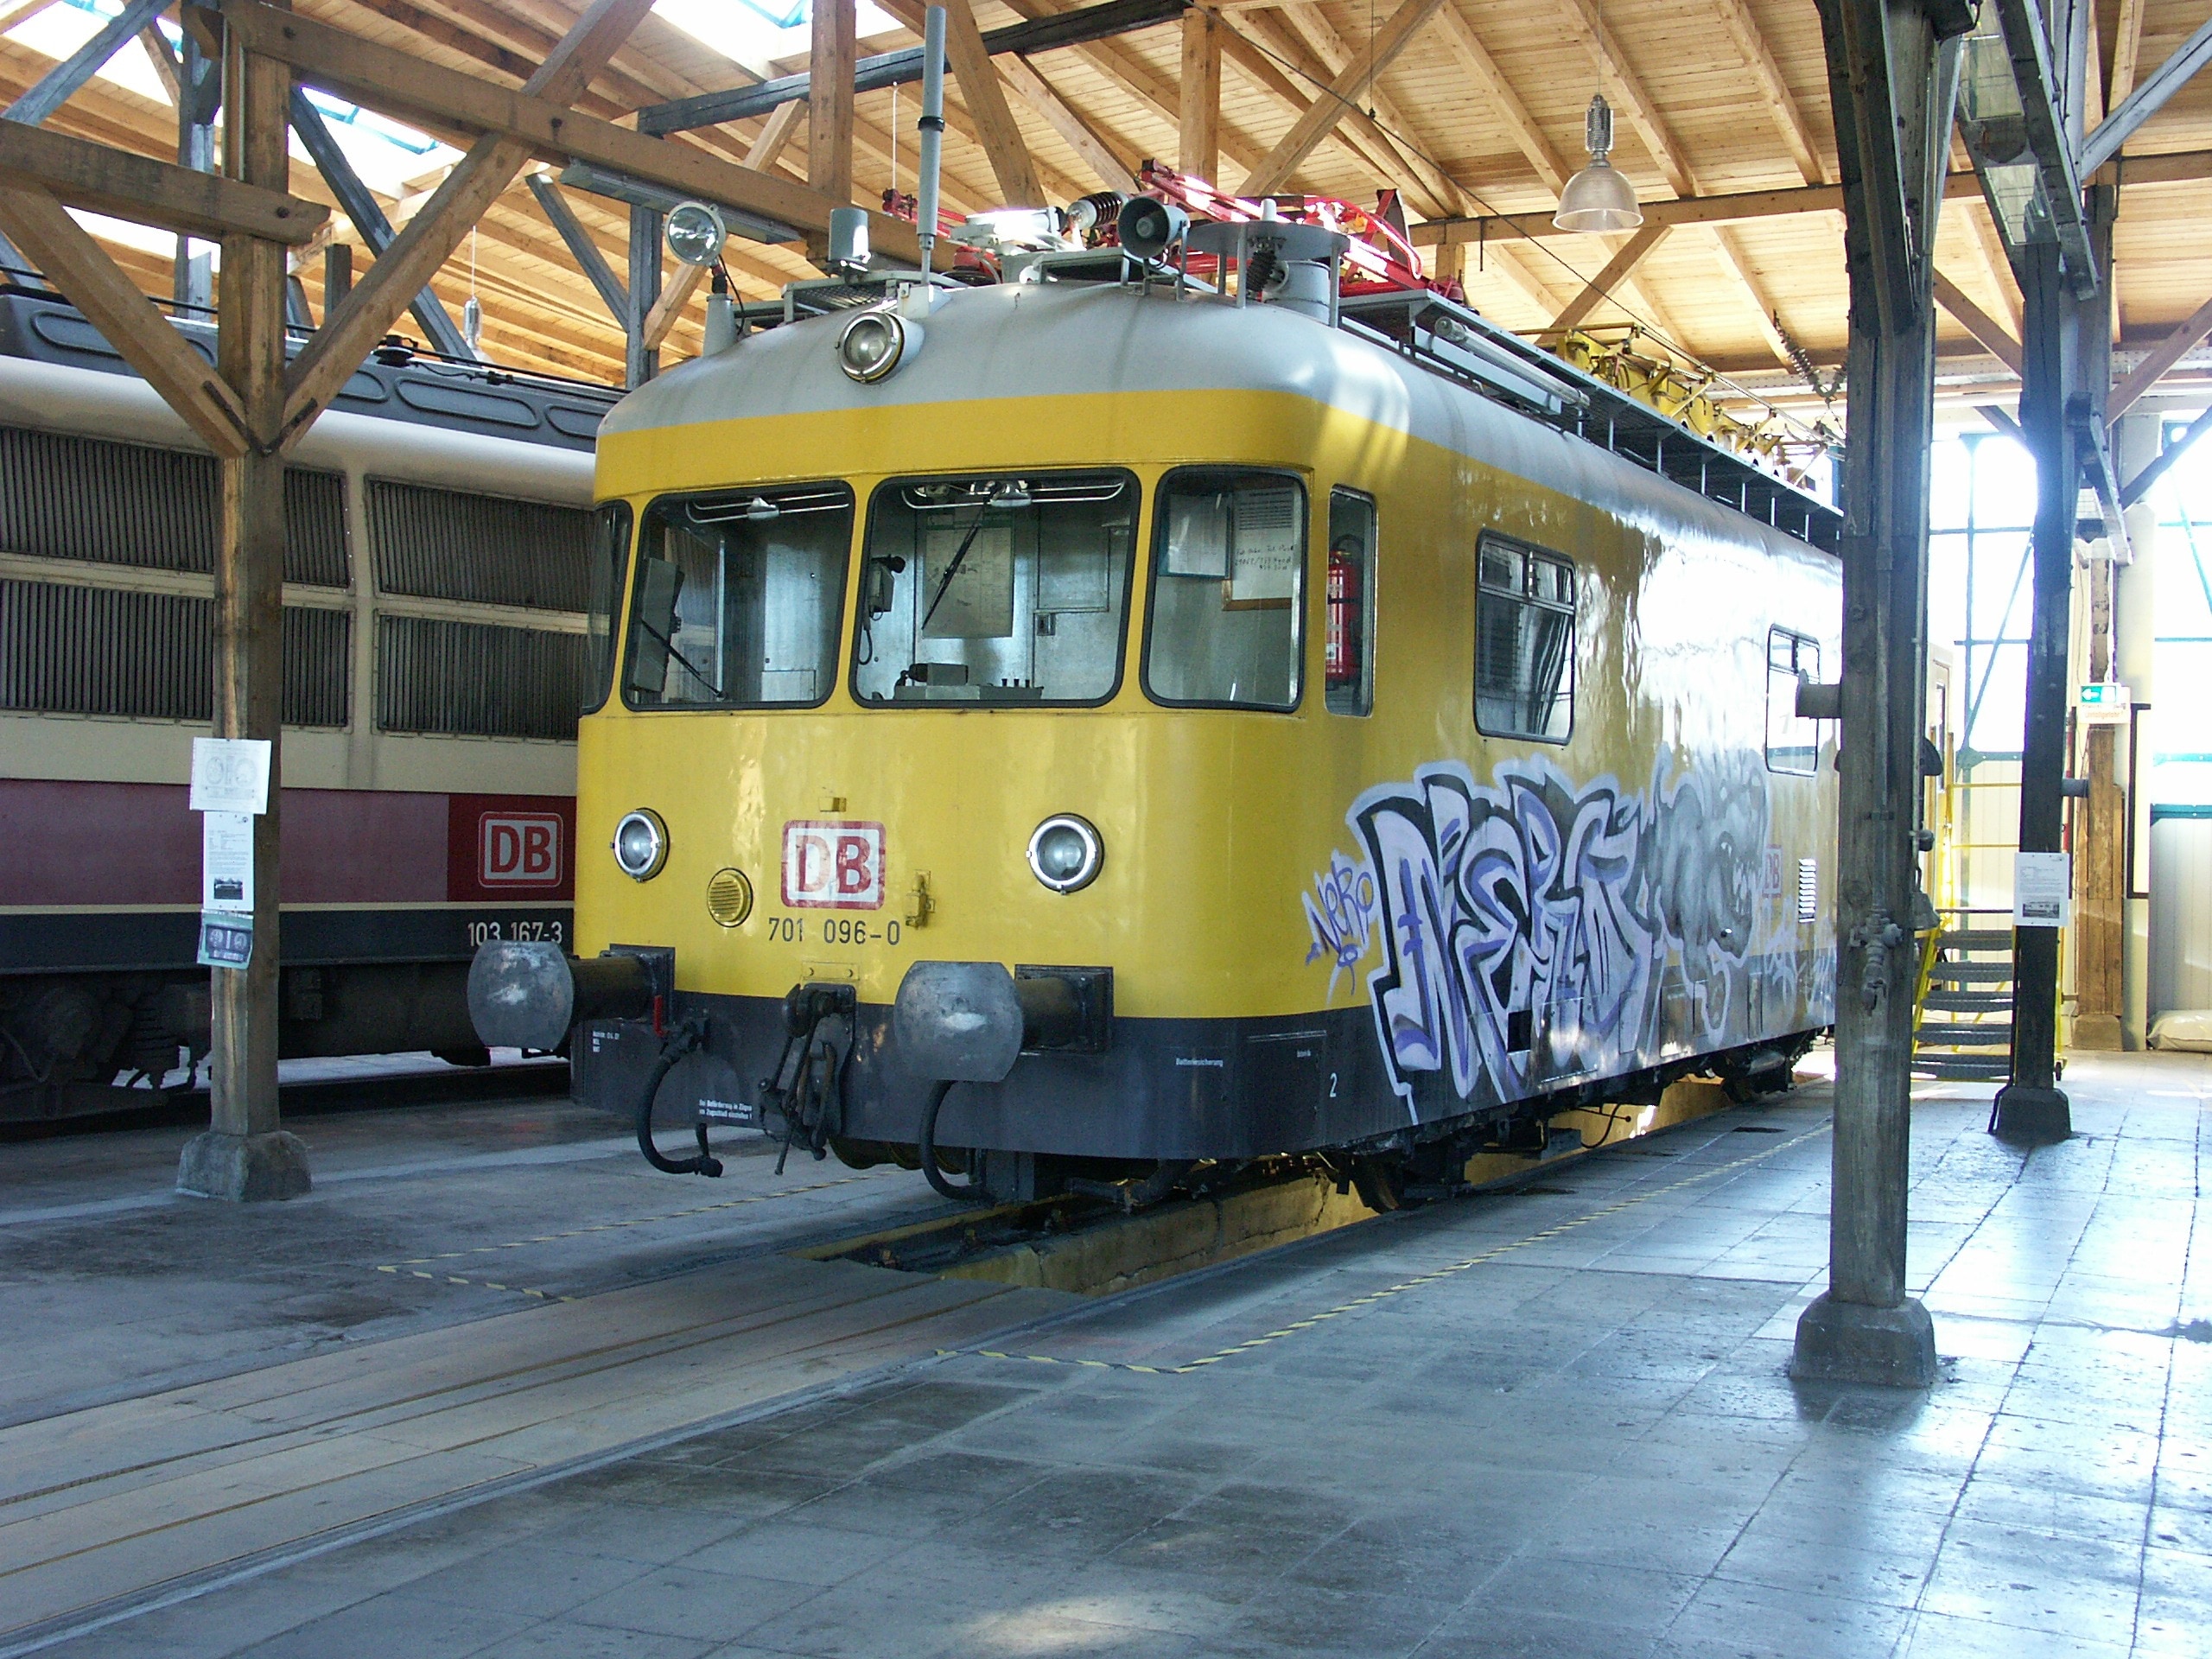 yellow, white, black graffiti painted train